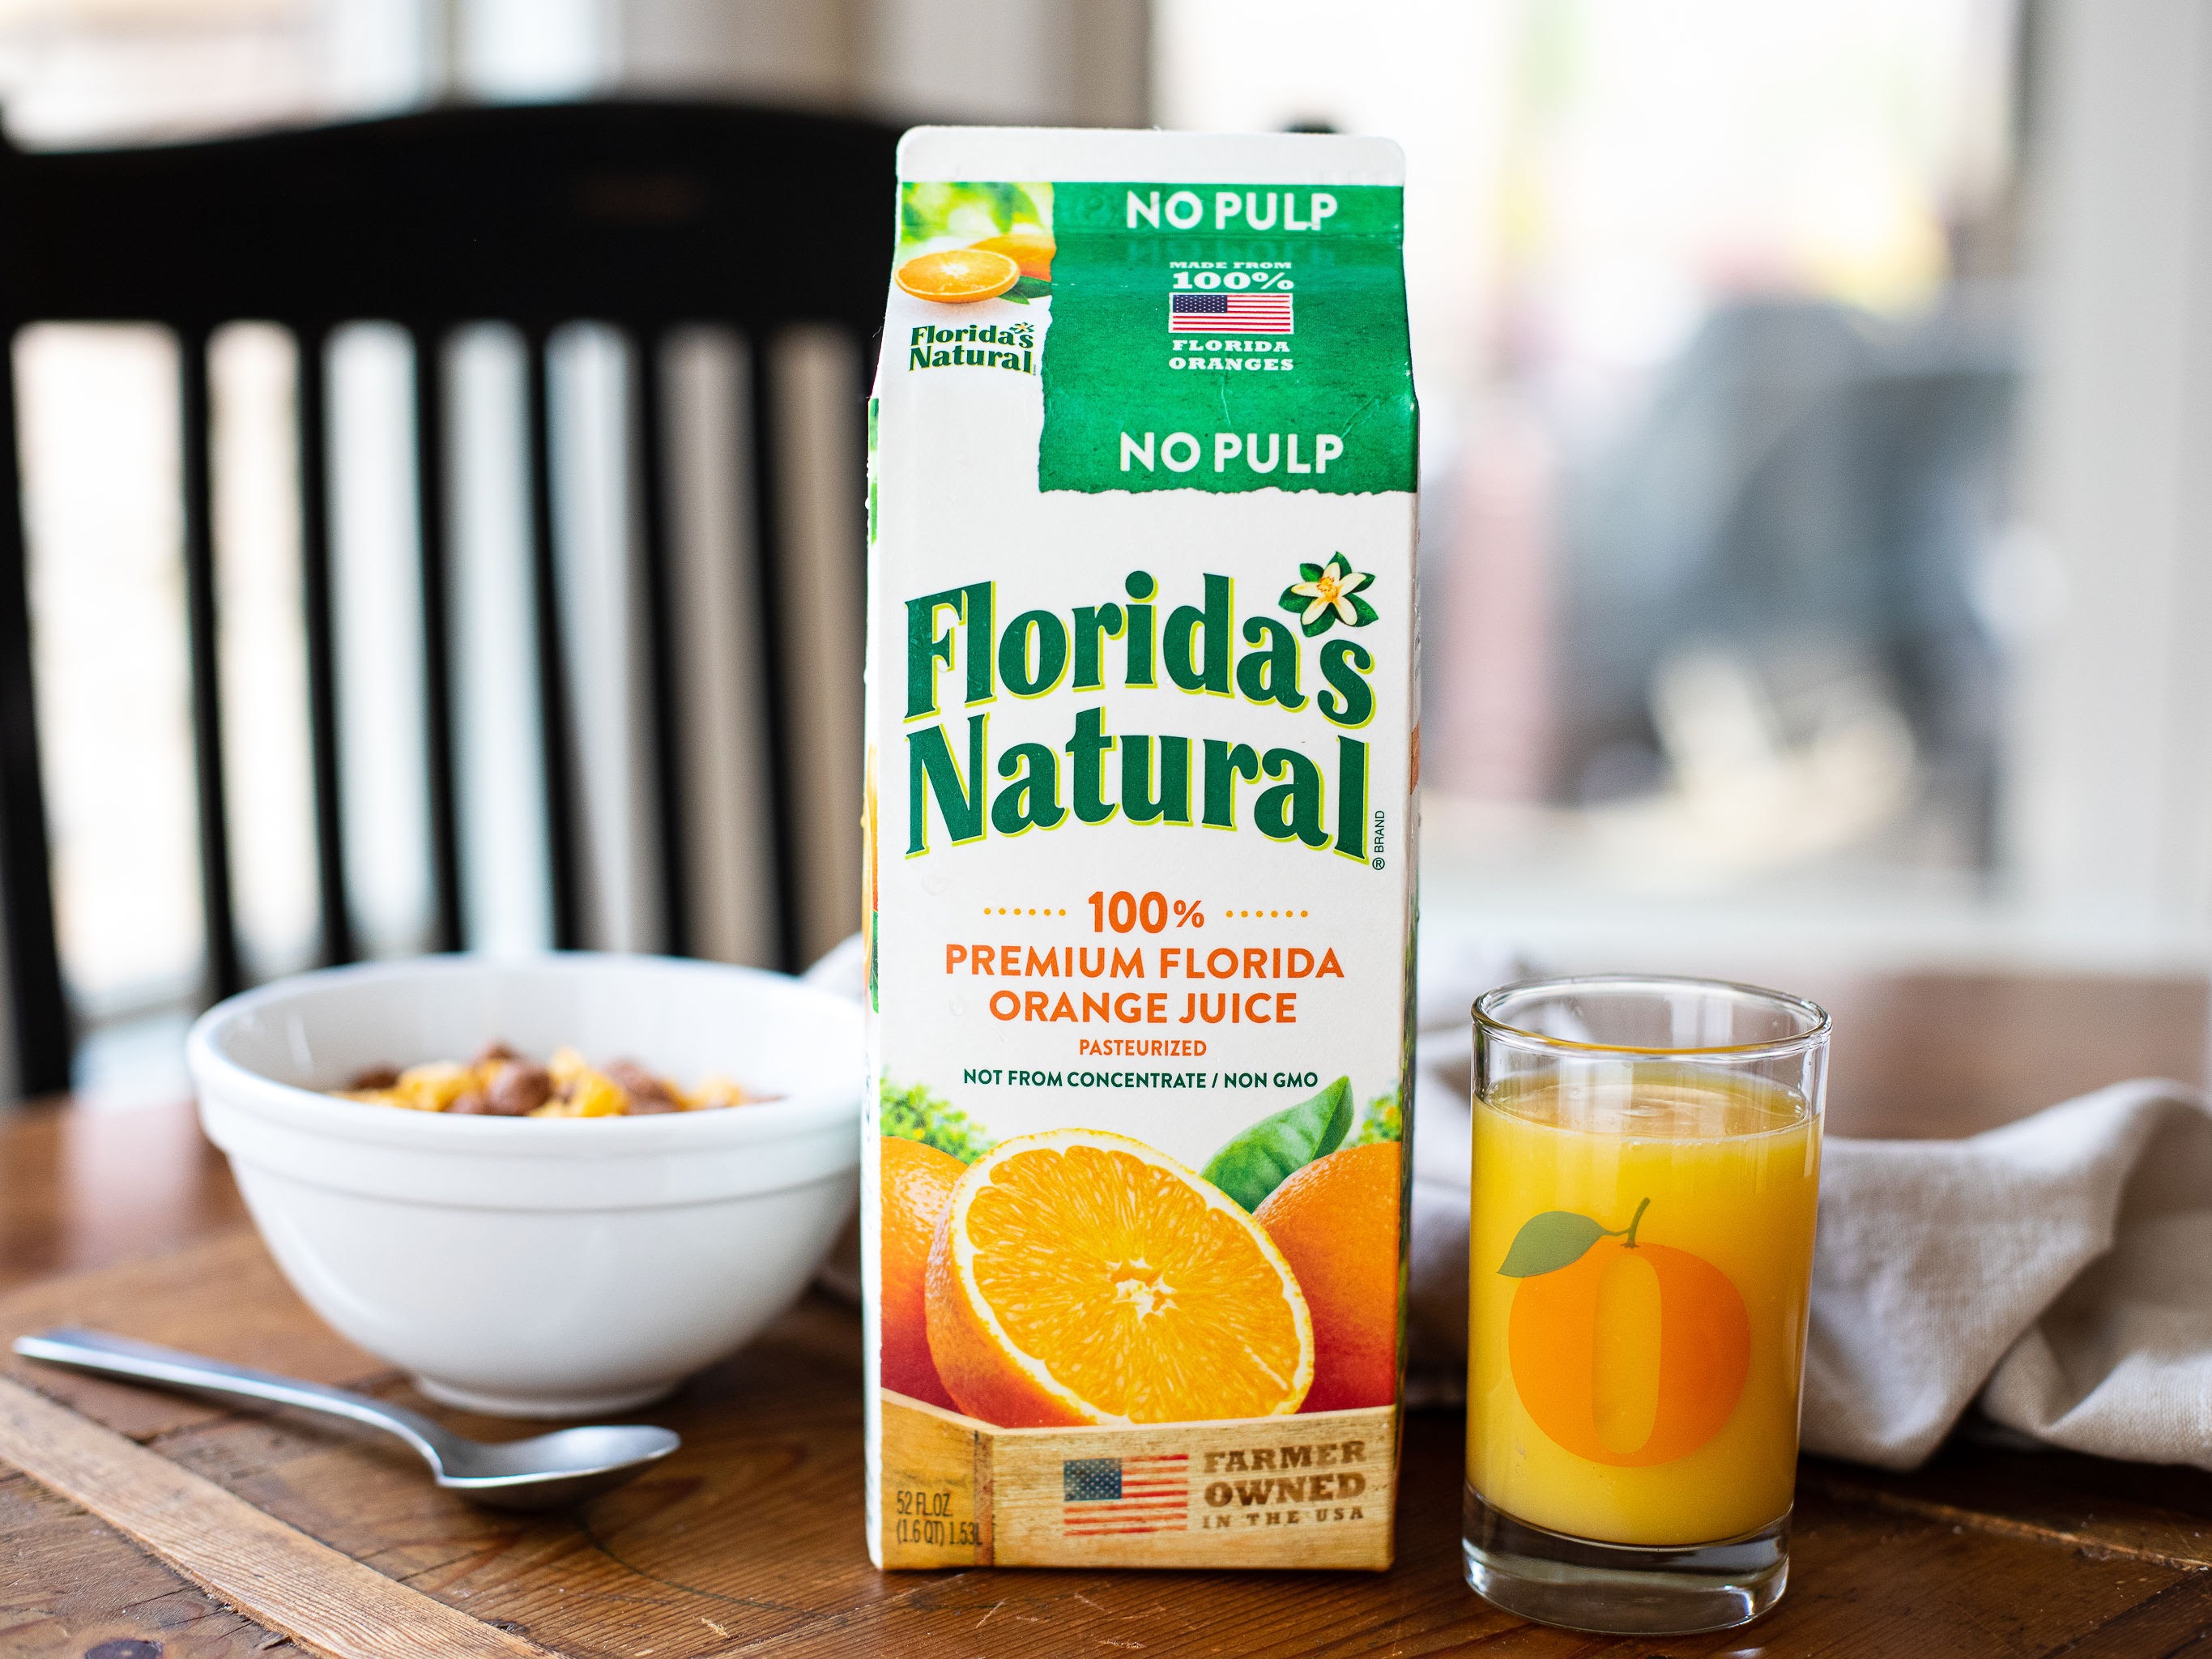 Florida’s Natural Orange Juice $2.83 At Publix